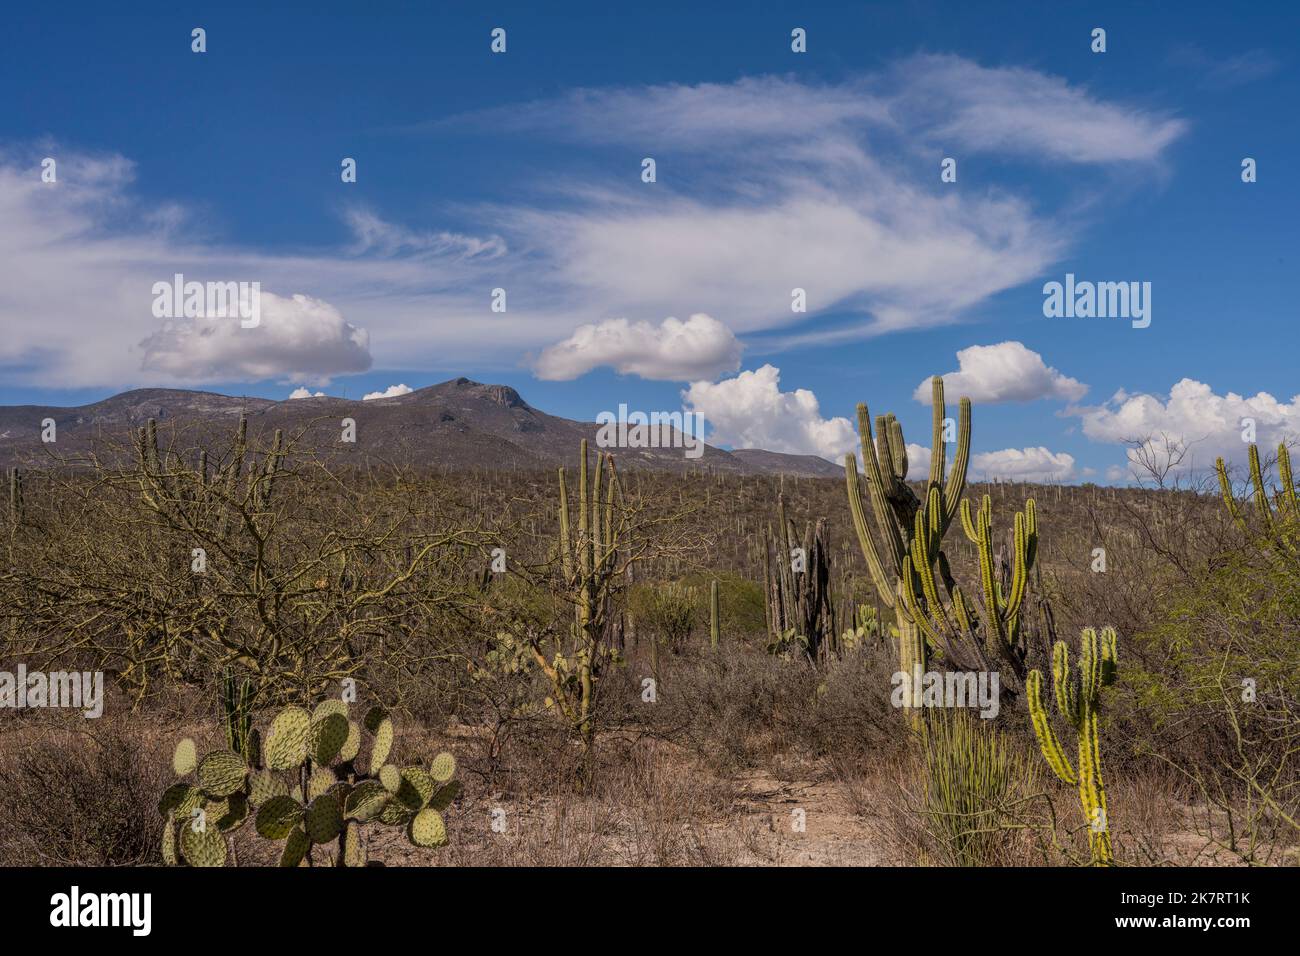 Landscape with Neobuxbaumia tetetzo (Tetetzo) cacti at the Tehuacan-Cuicatlan Biosphere Reserve (UNESCO World Heritage Site) near the village of Zapot Stock Photo